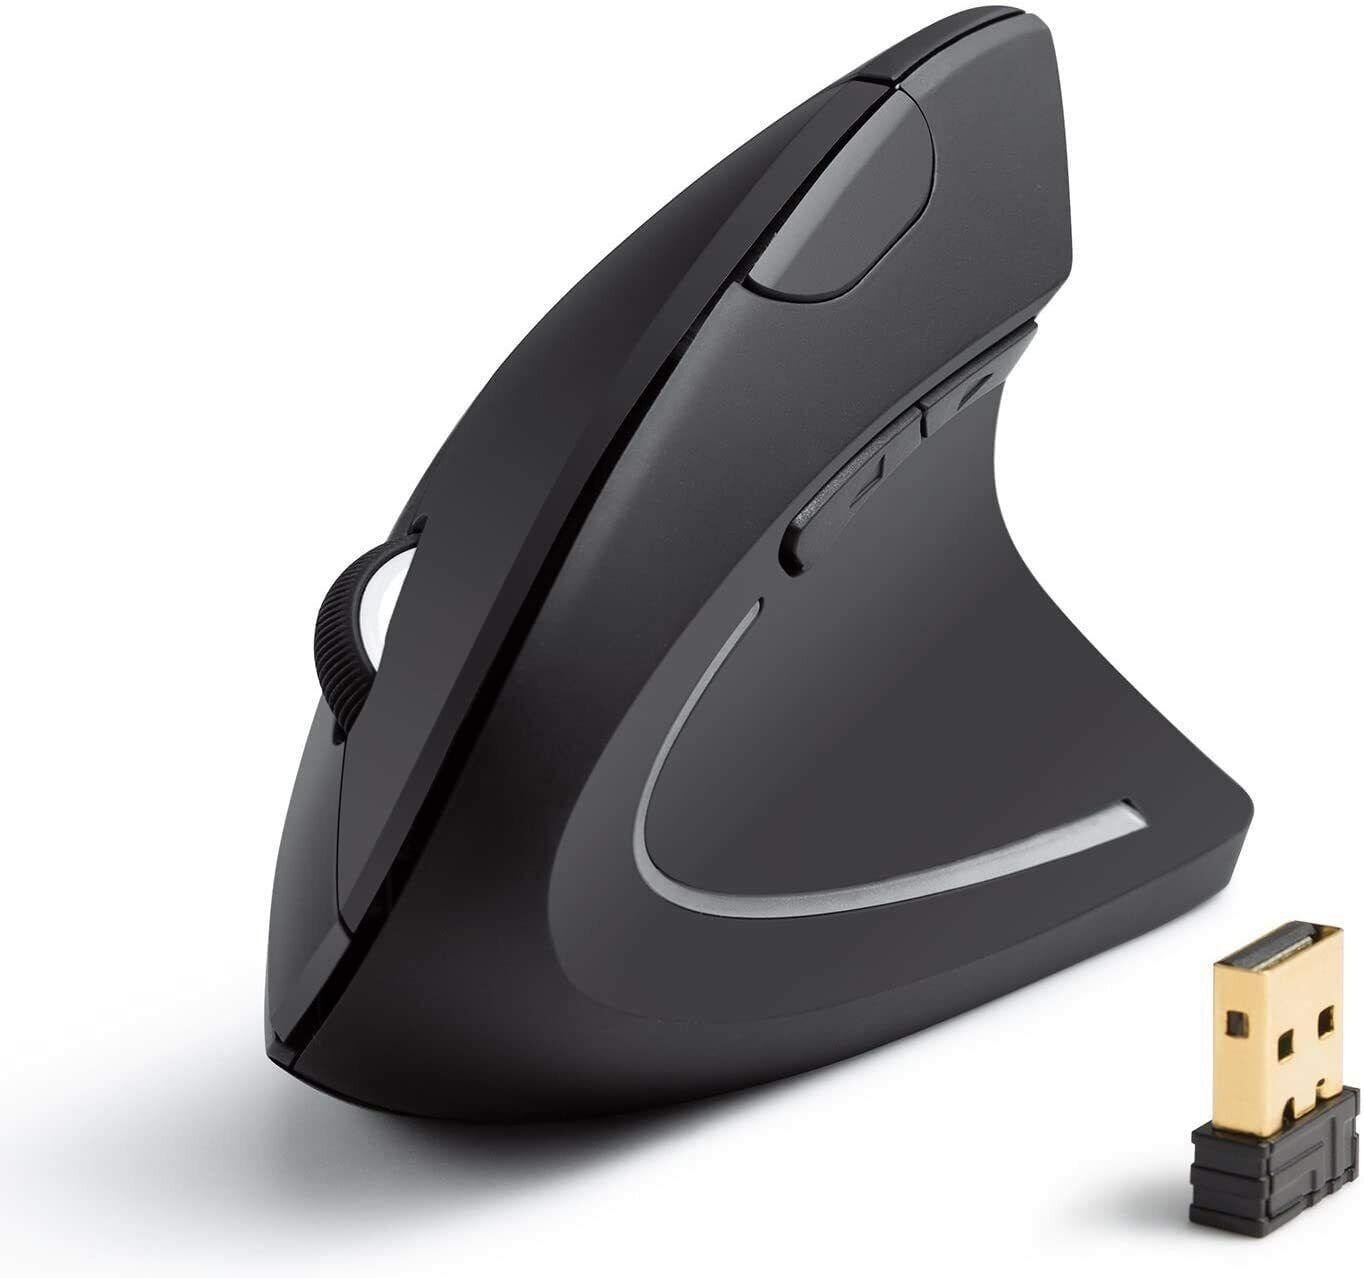 Anker 2.4G Wireless Vertical Ergonomic Optical Mouse 1600DPI 5-Button for Laptop